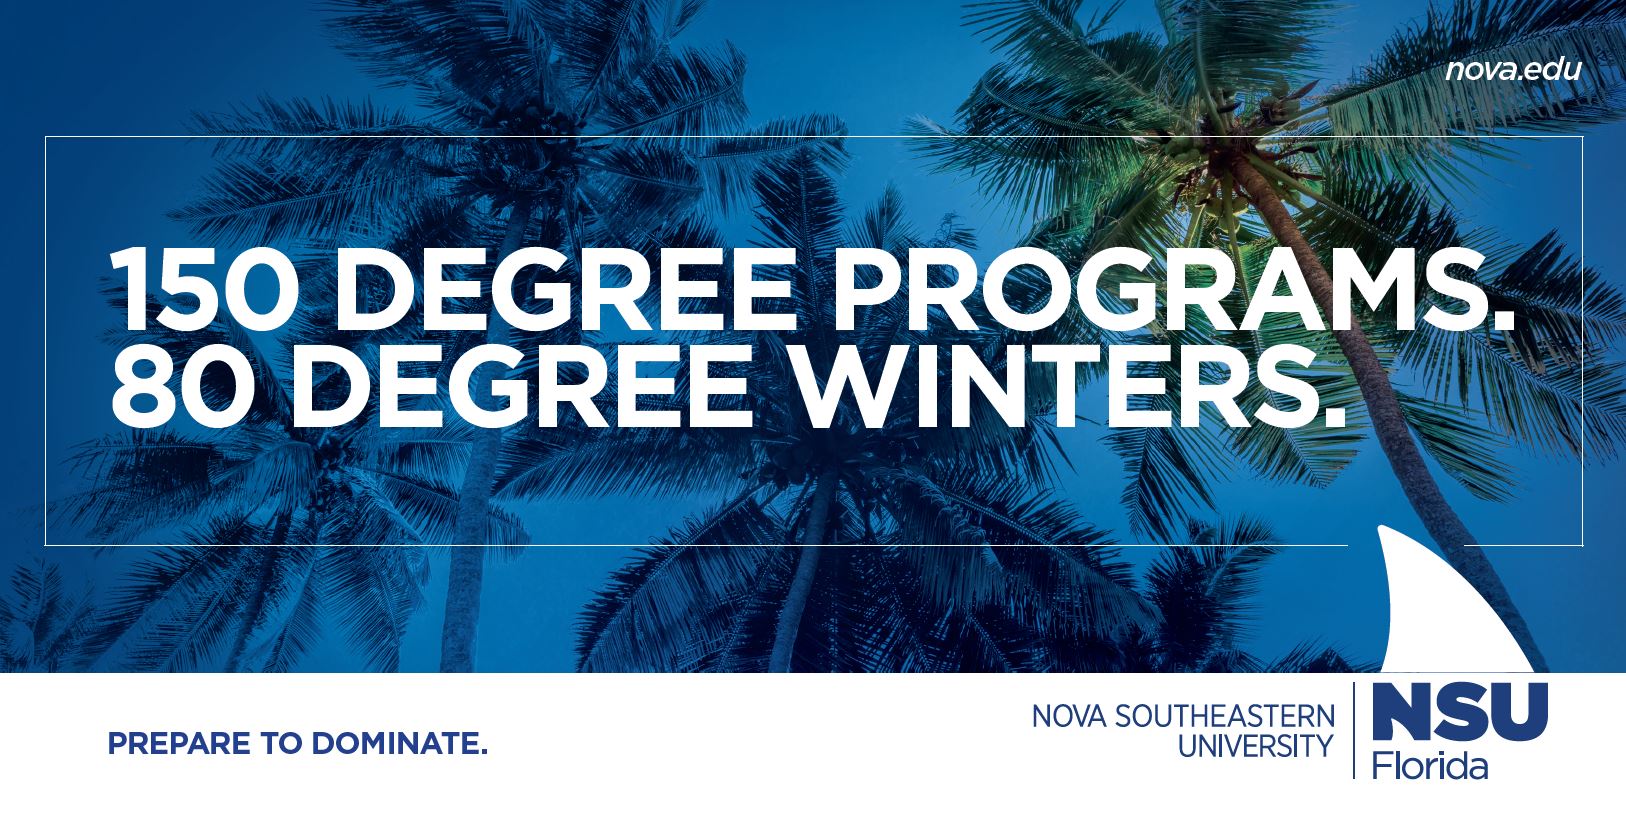 150 degree programs, 80 degree winters